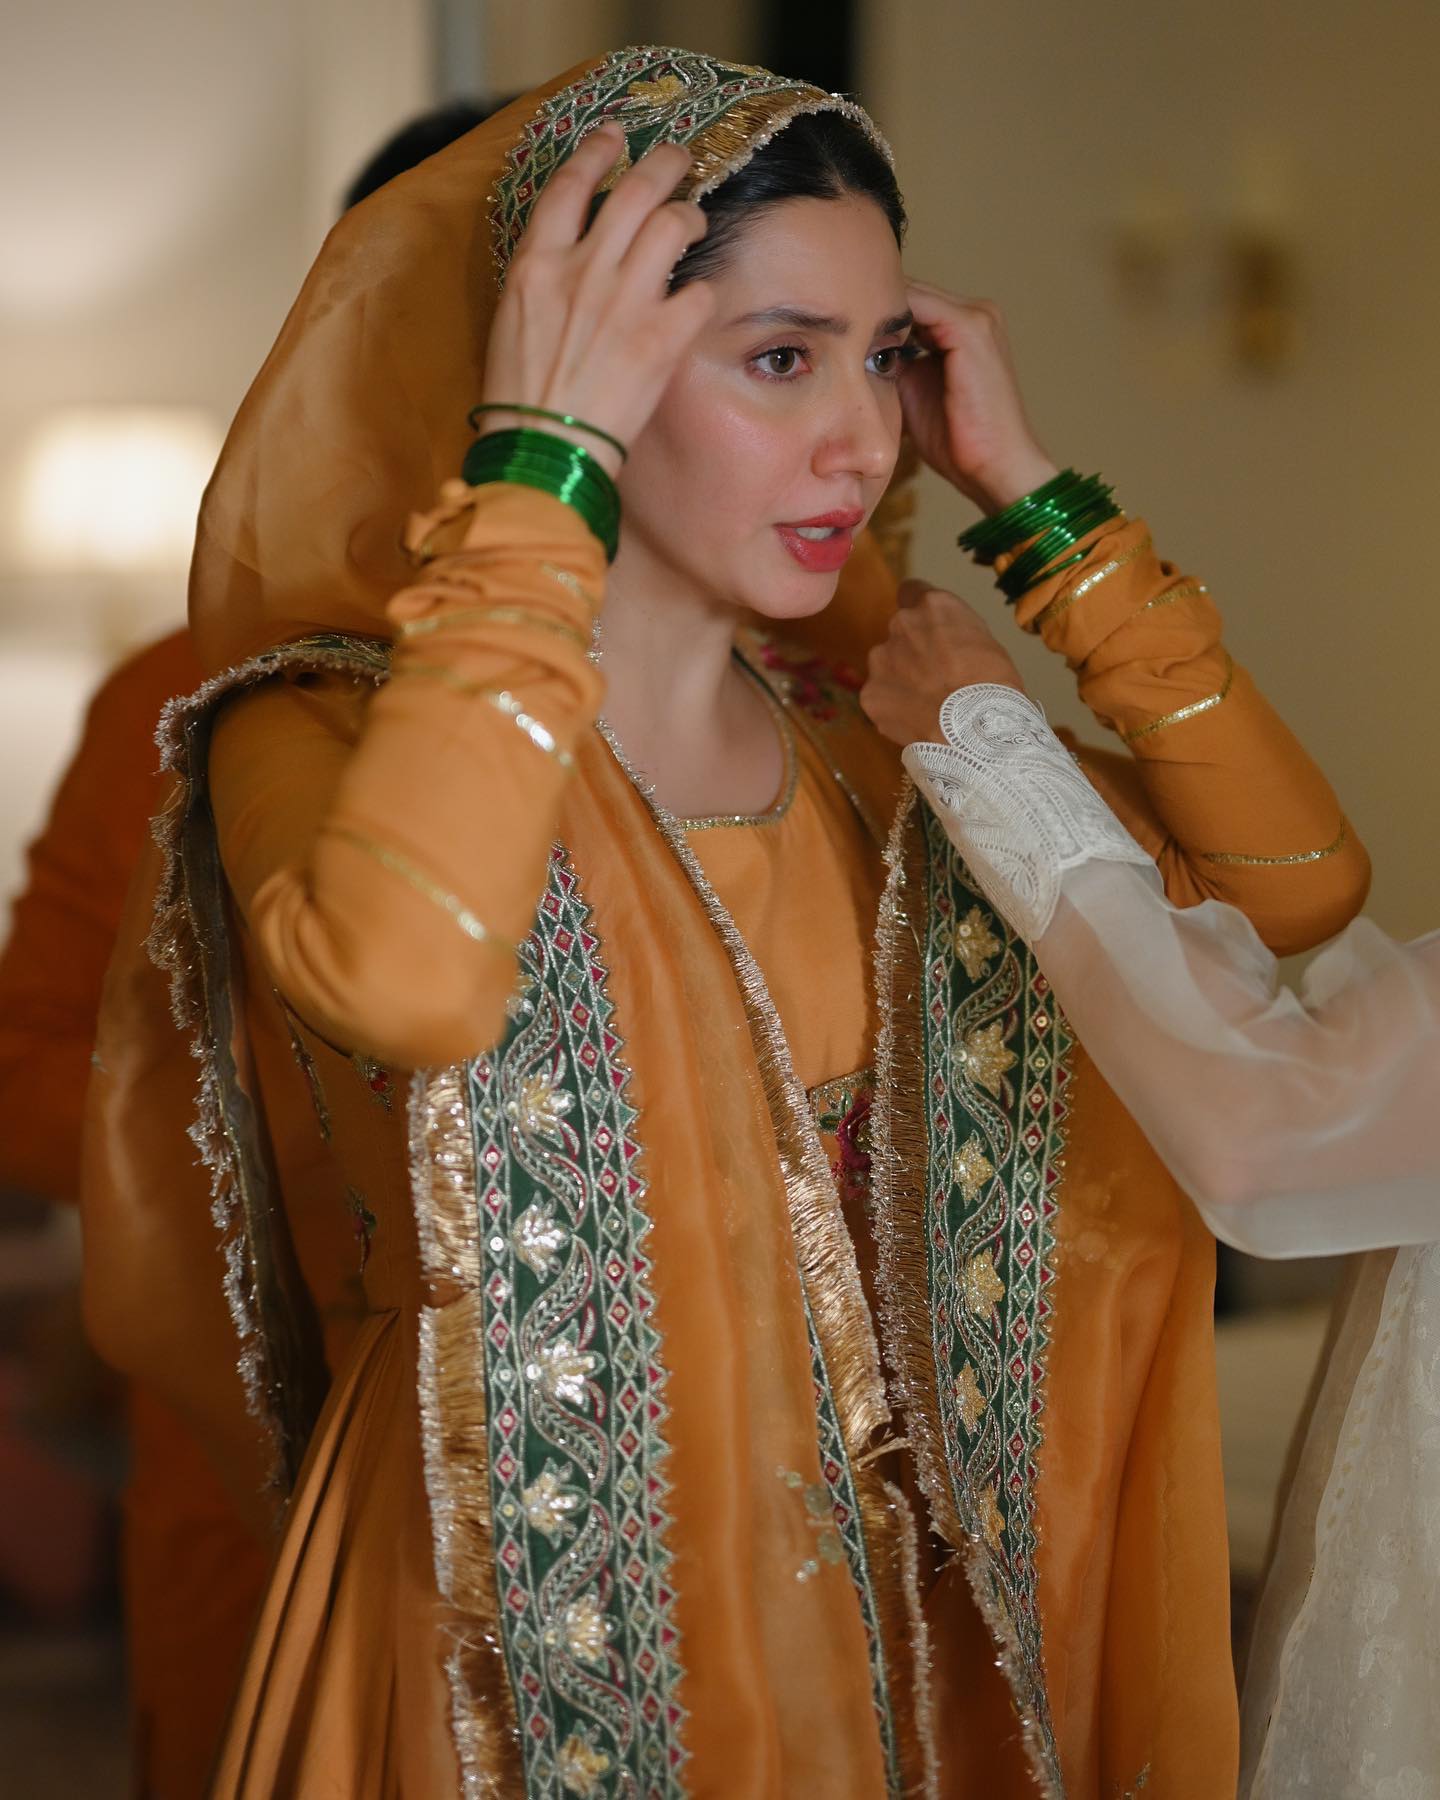 Mahira Khan Shares A Peek Of Her Pre-Wedding Bridal Looks